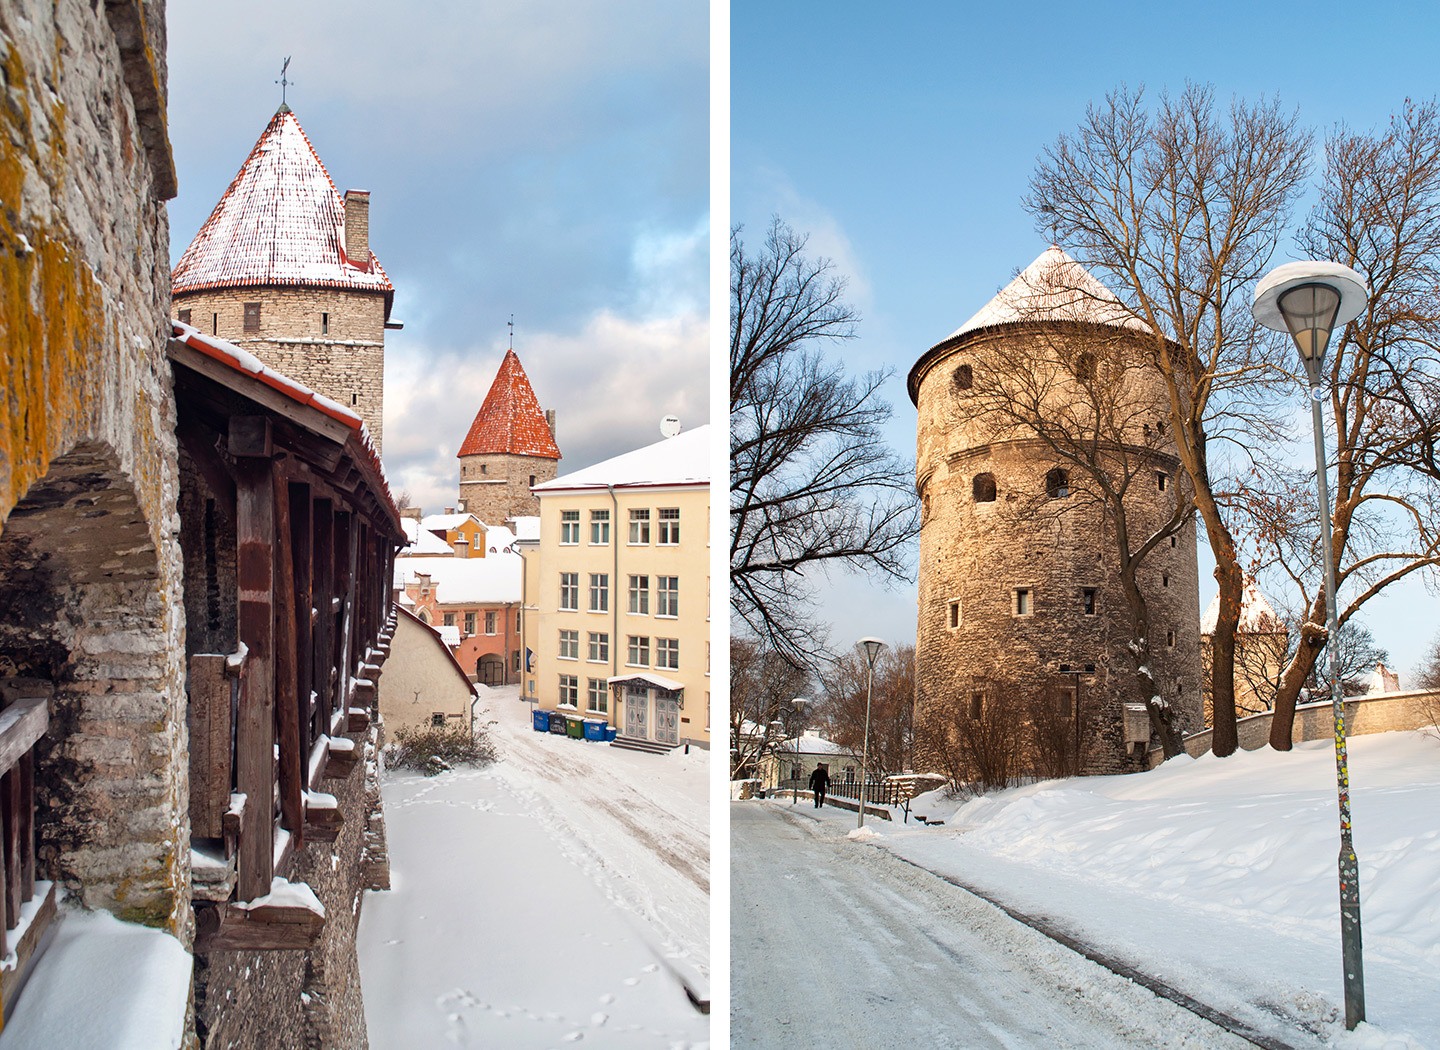 Tallinn city walls and Kiek in de Kök tower